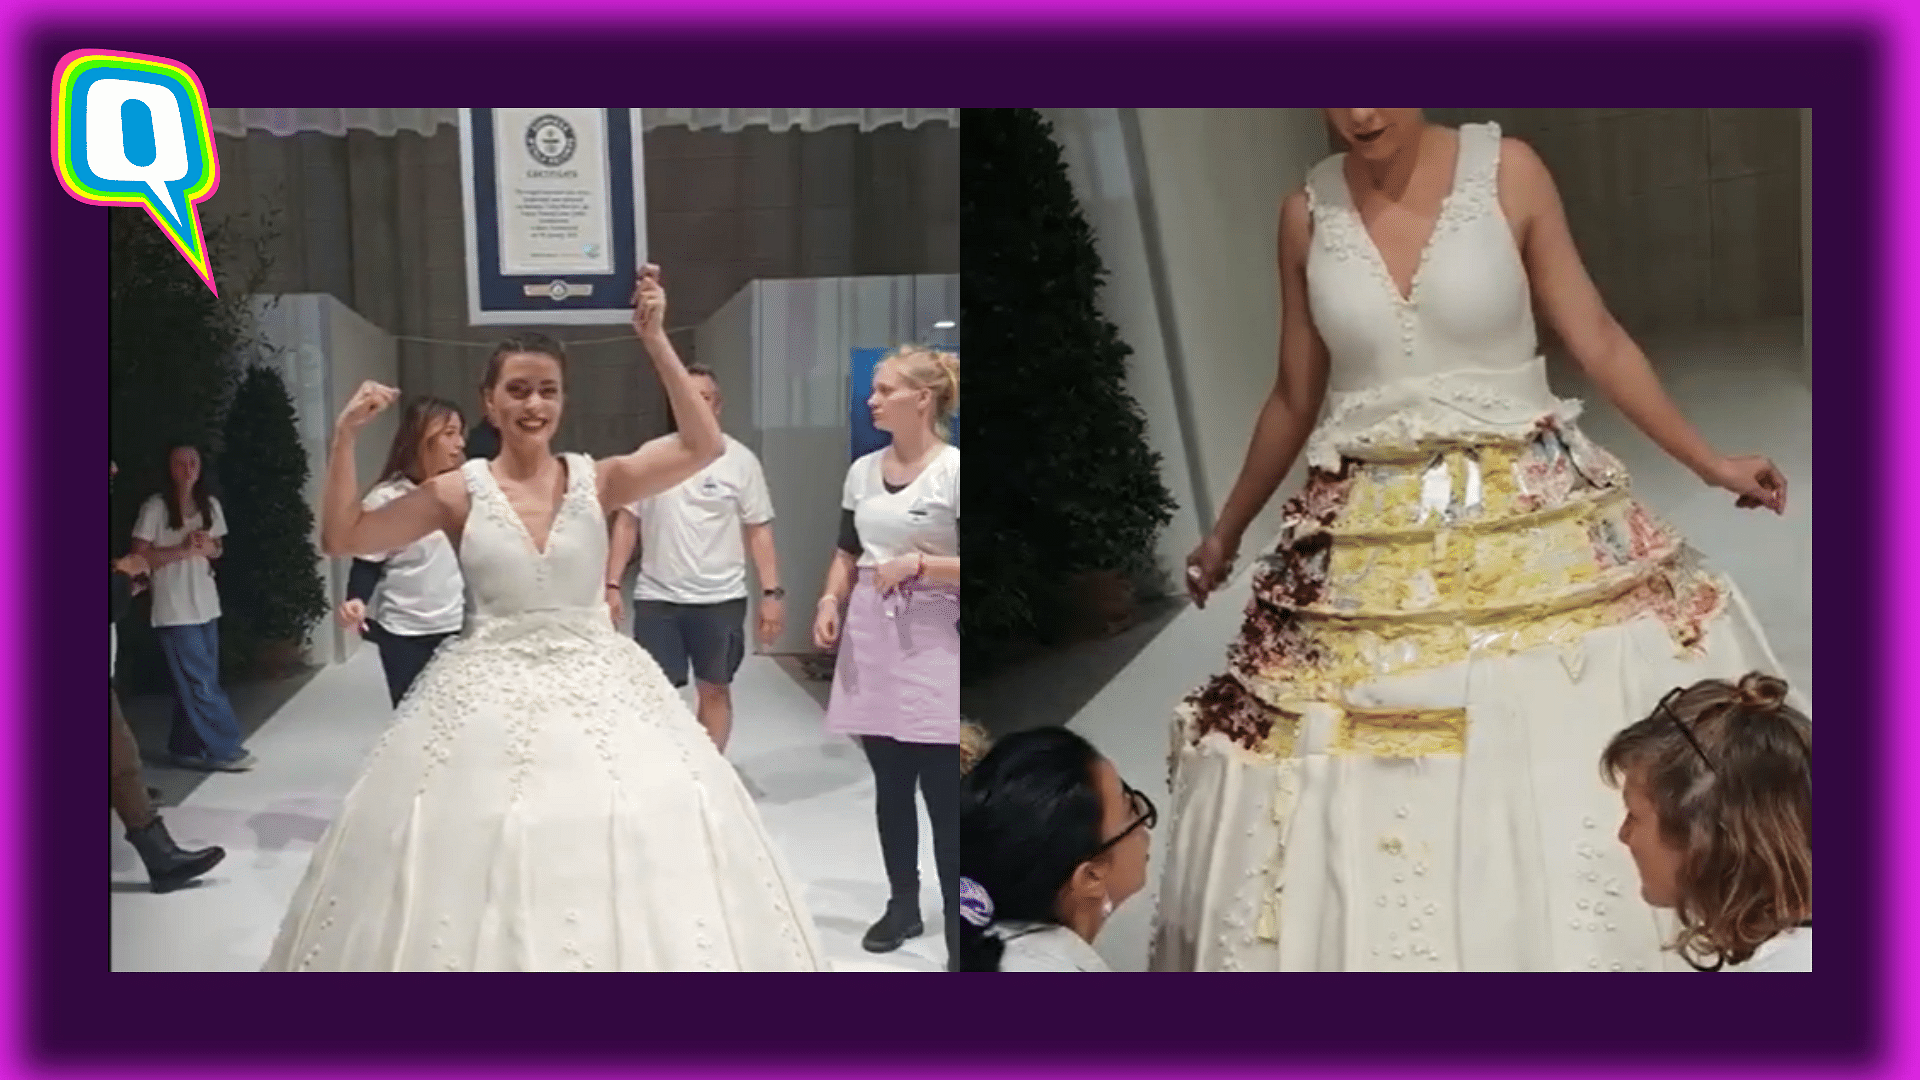 <div class="paragraphs"><p>Swiss Baker Sets Guinness World Record For Making World's Largest Cake Dress</p></div>